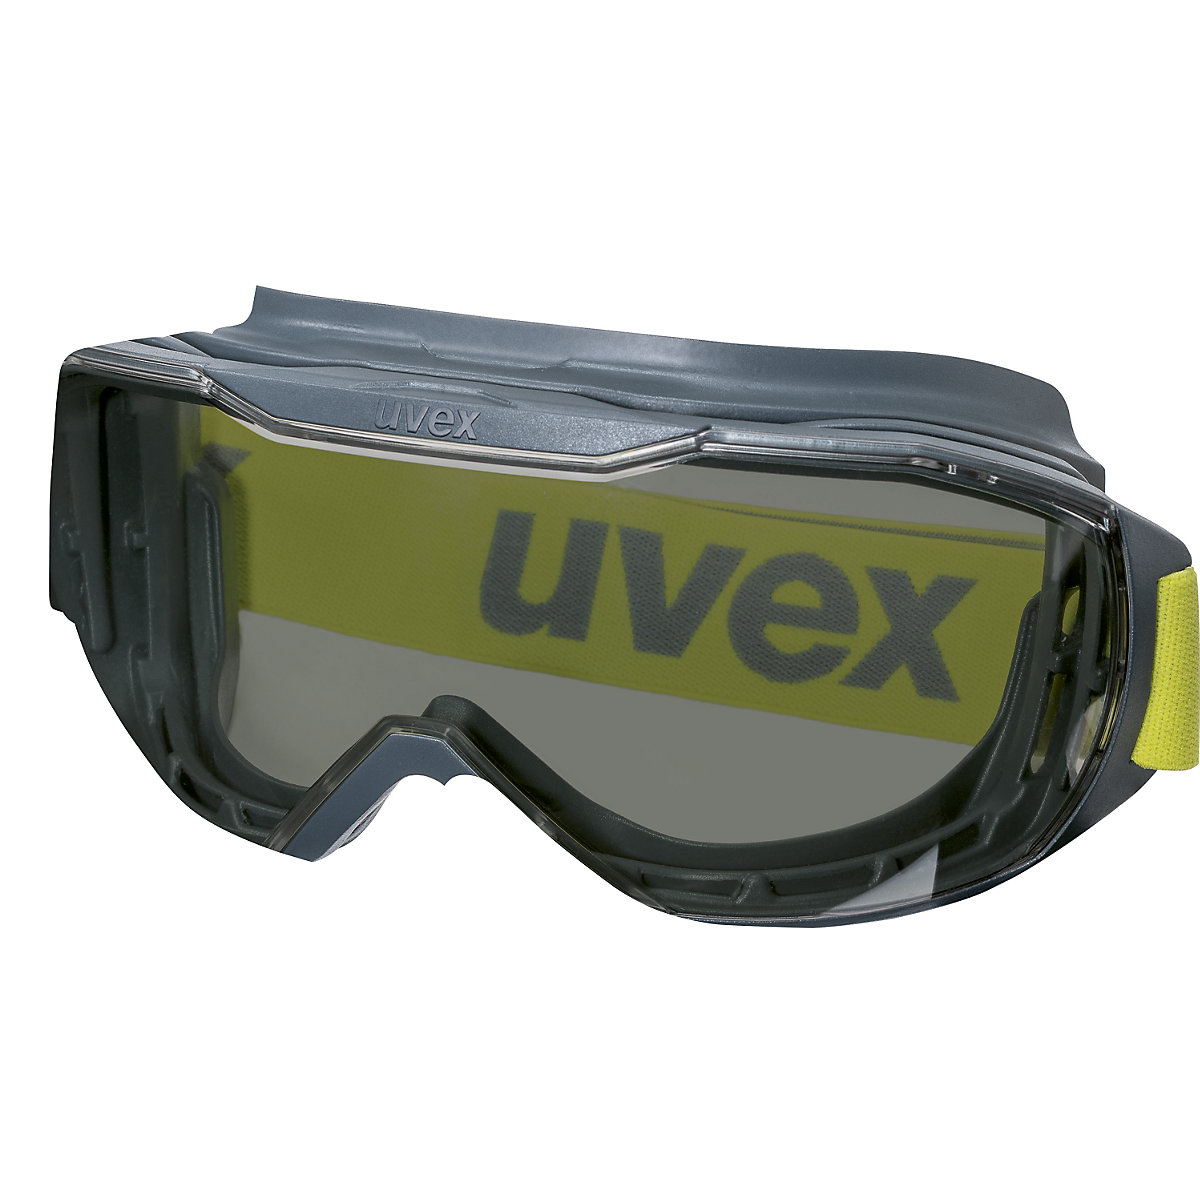 Velike zaštitne naočale megasonic - Uvex